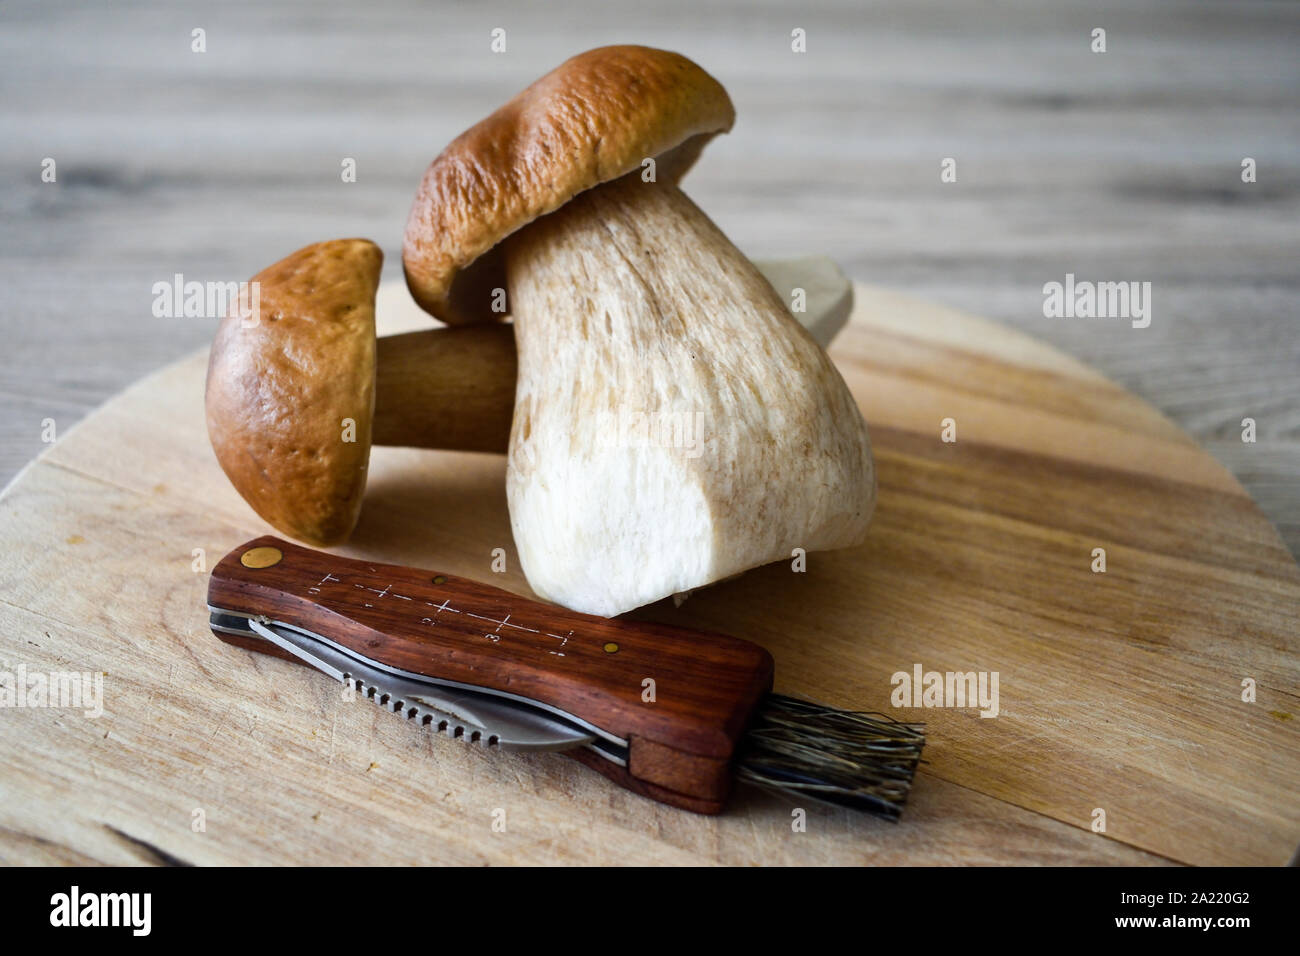 Two boletus mushroom on cutting board with mushroom pickers knife. Stock Photo